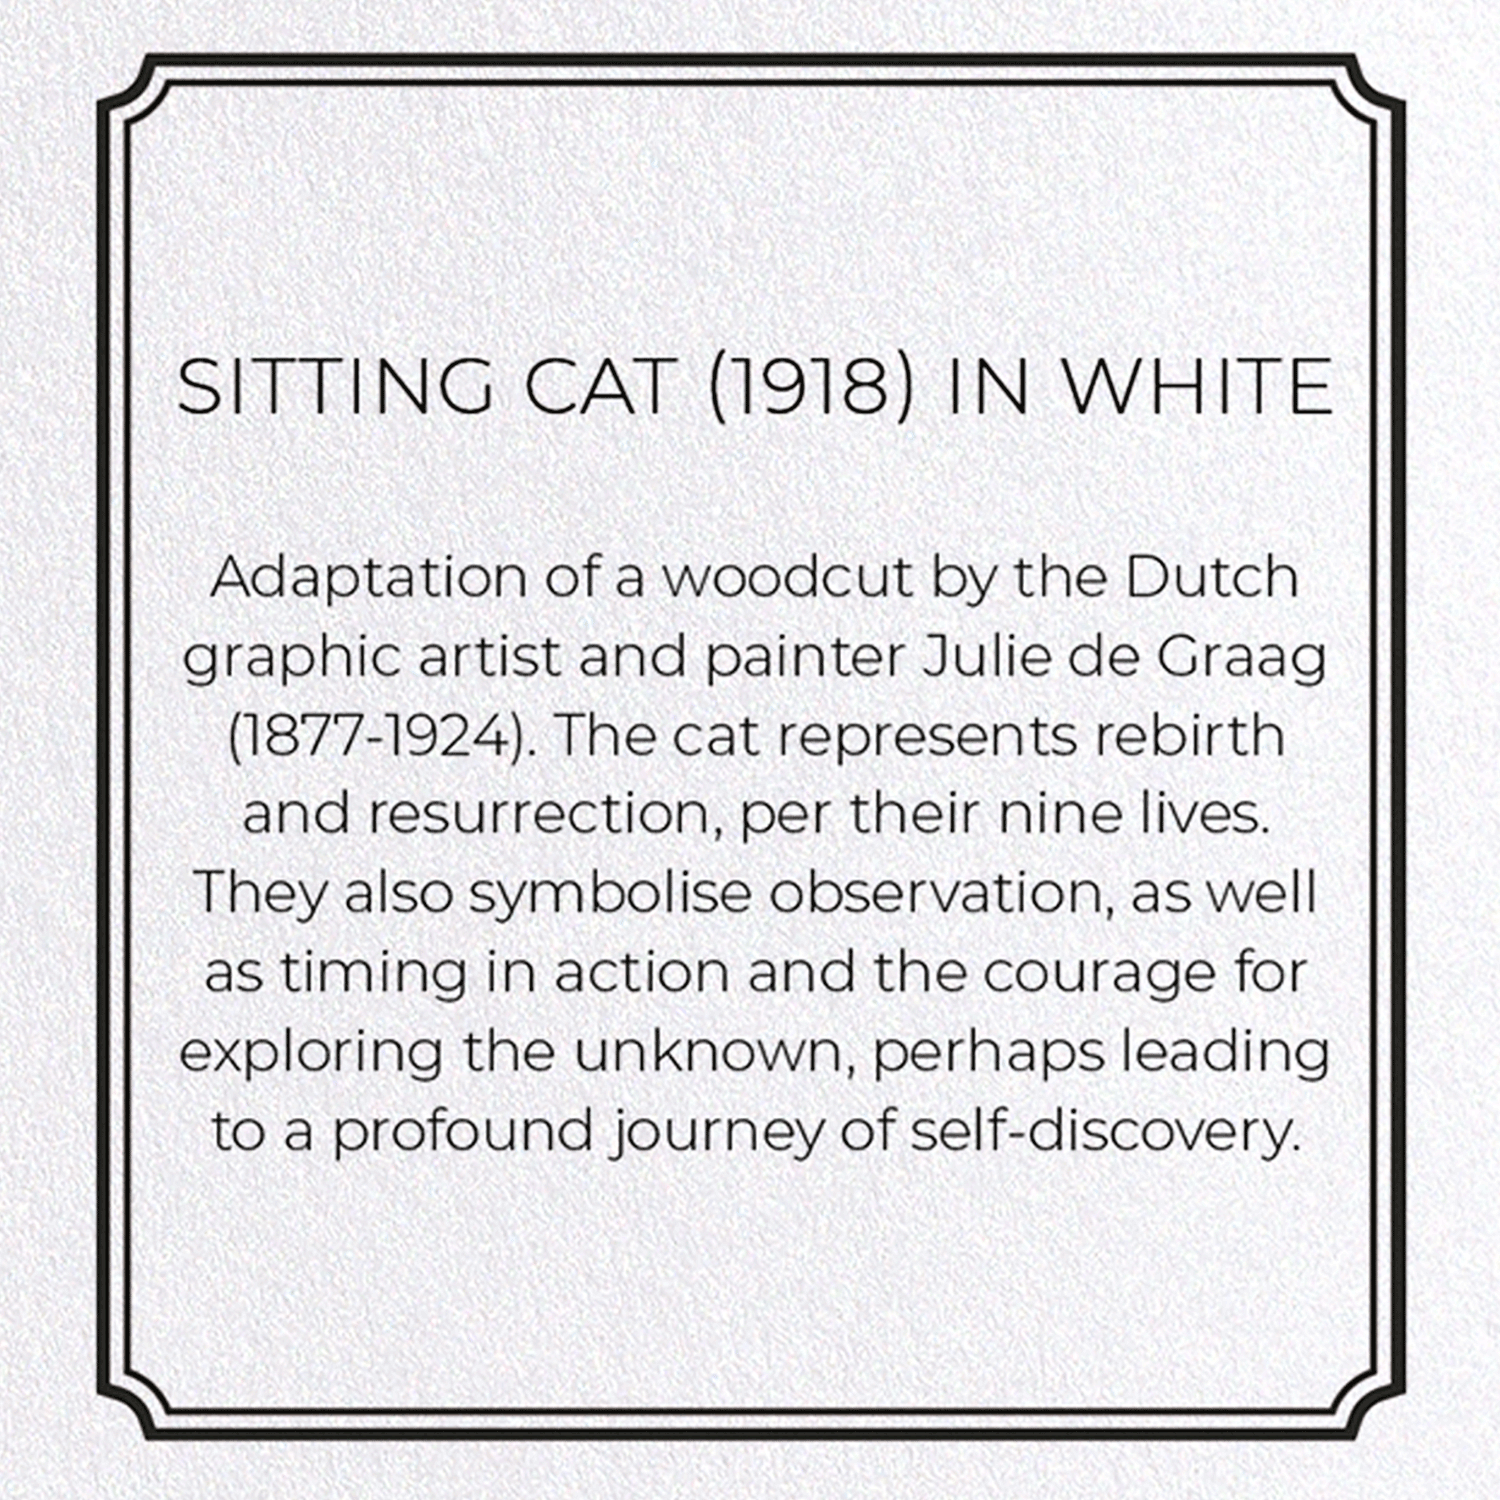 SITTING CAT (1918) IN WHITE